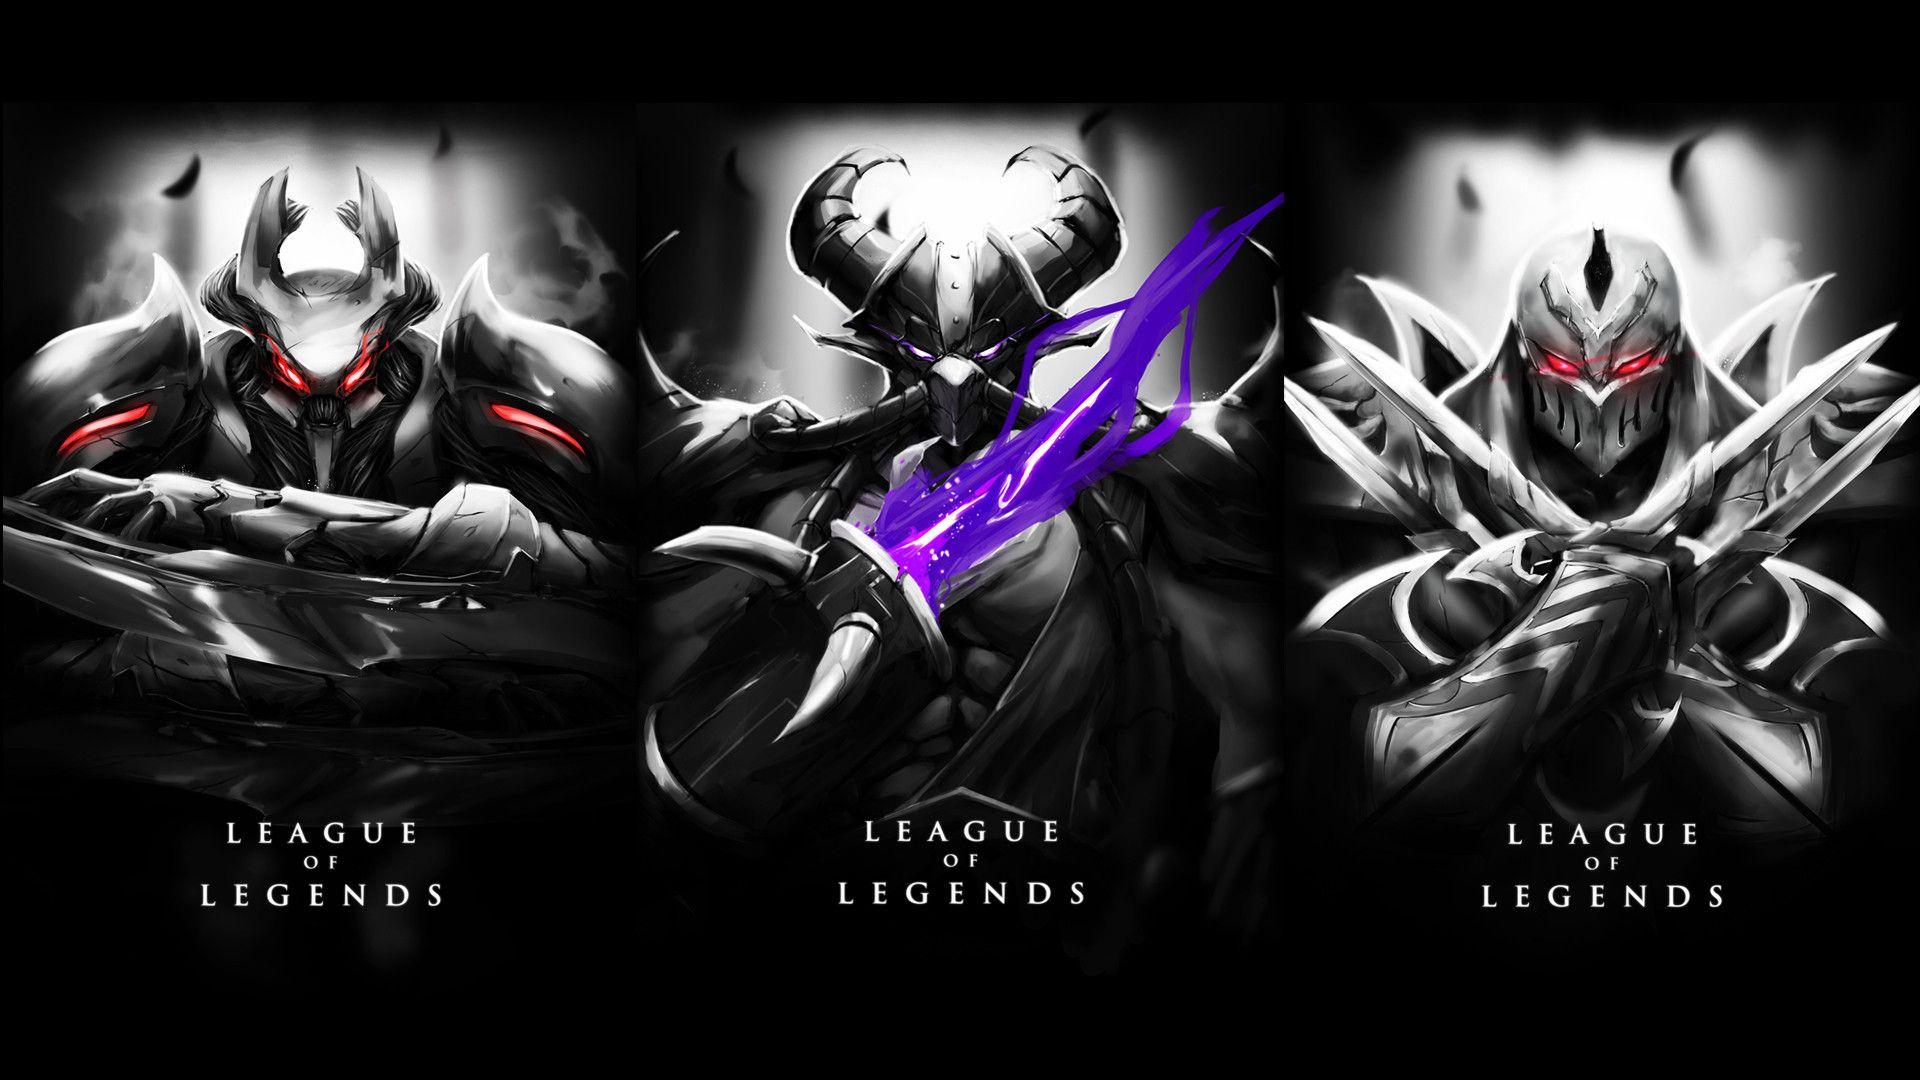 league of legends wallpaper hd 1920x1080 jungle